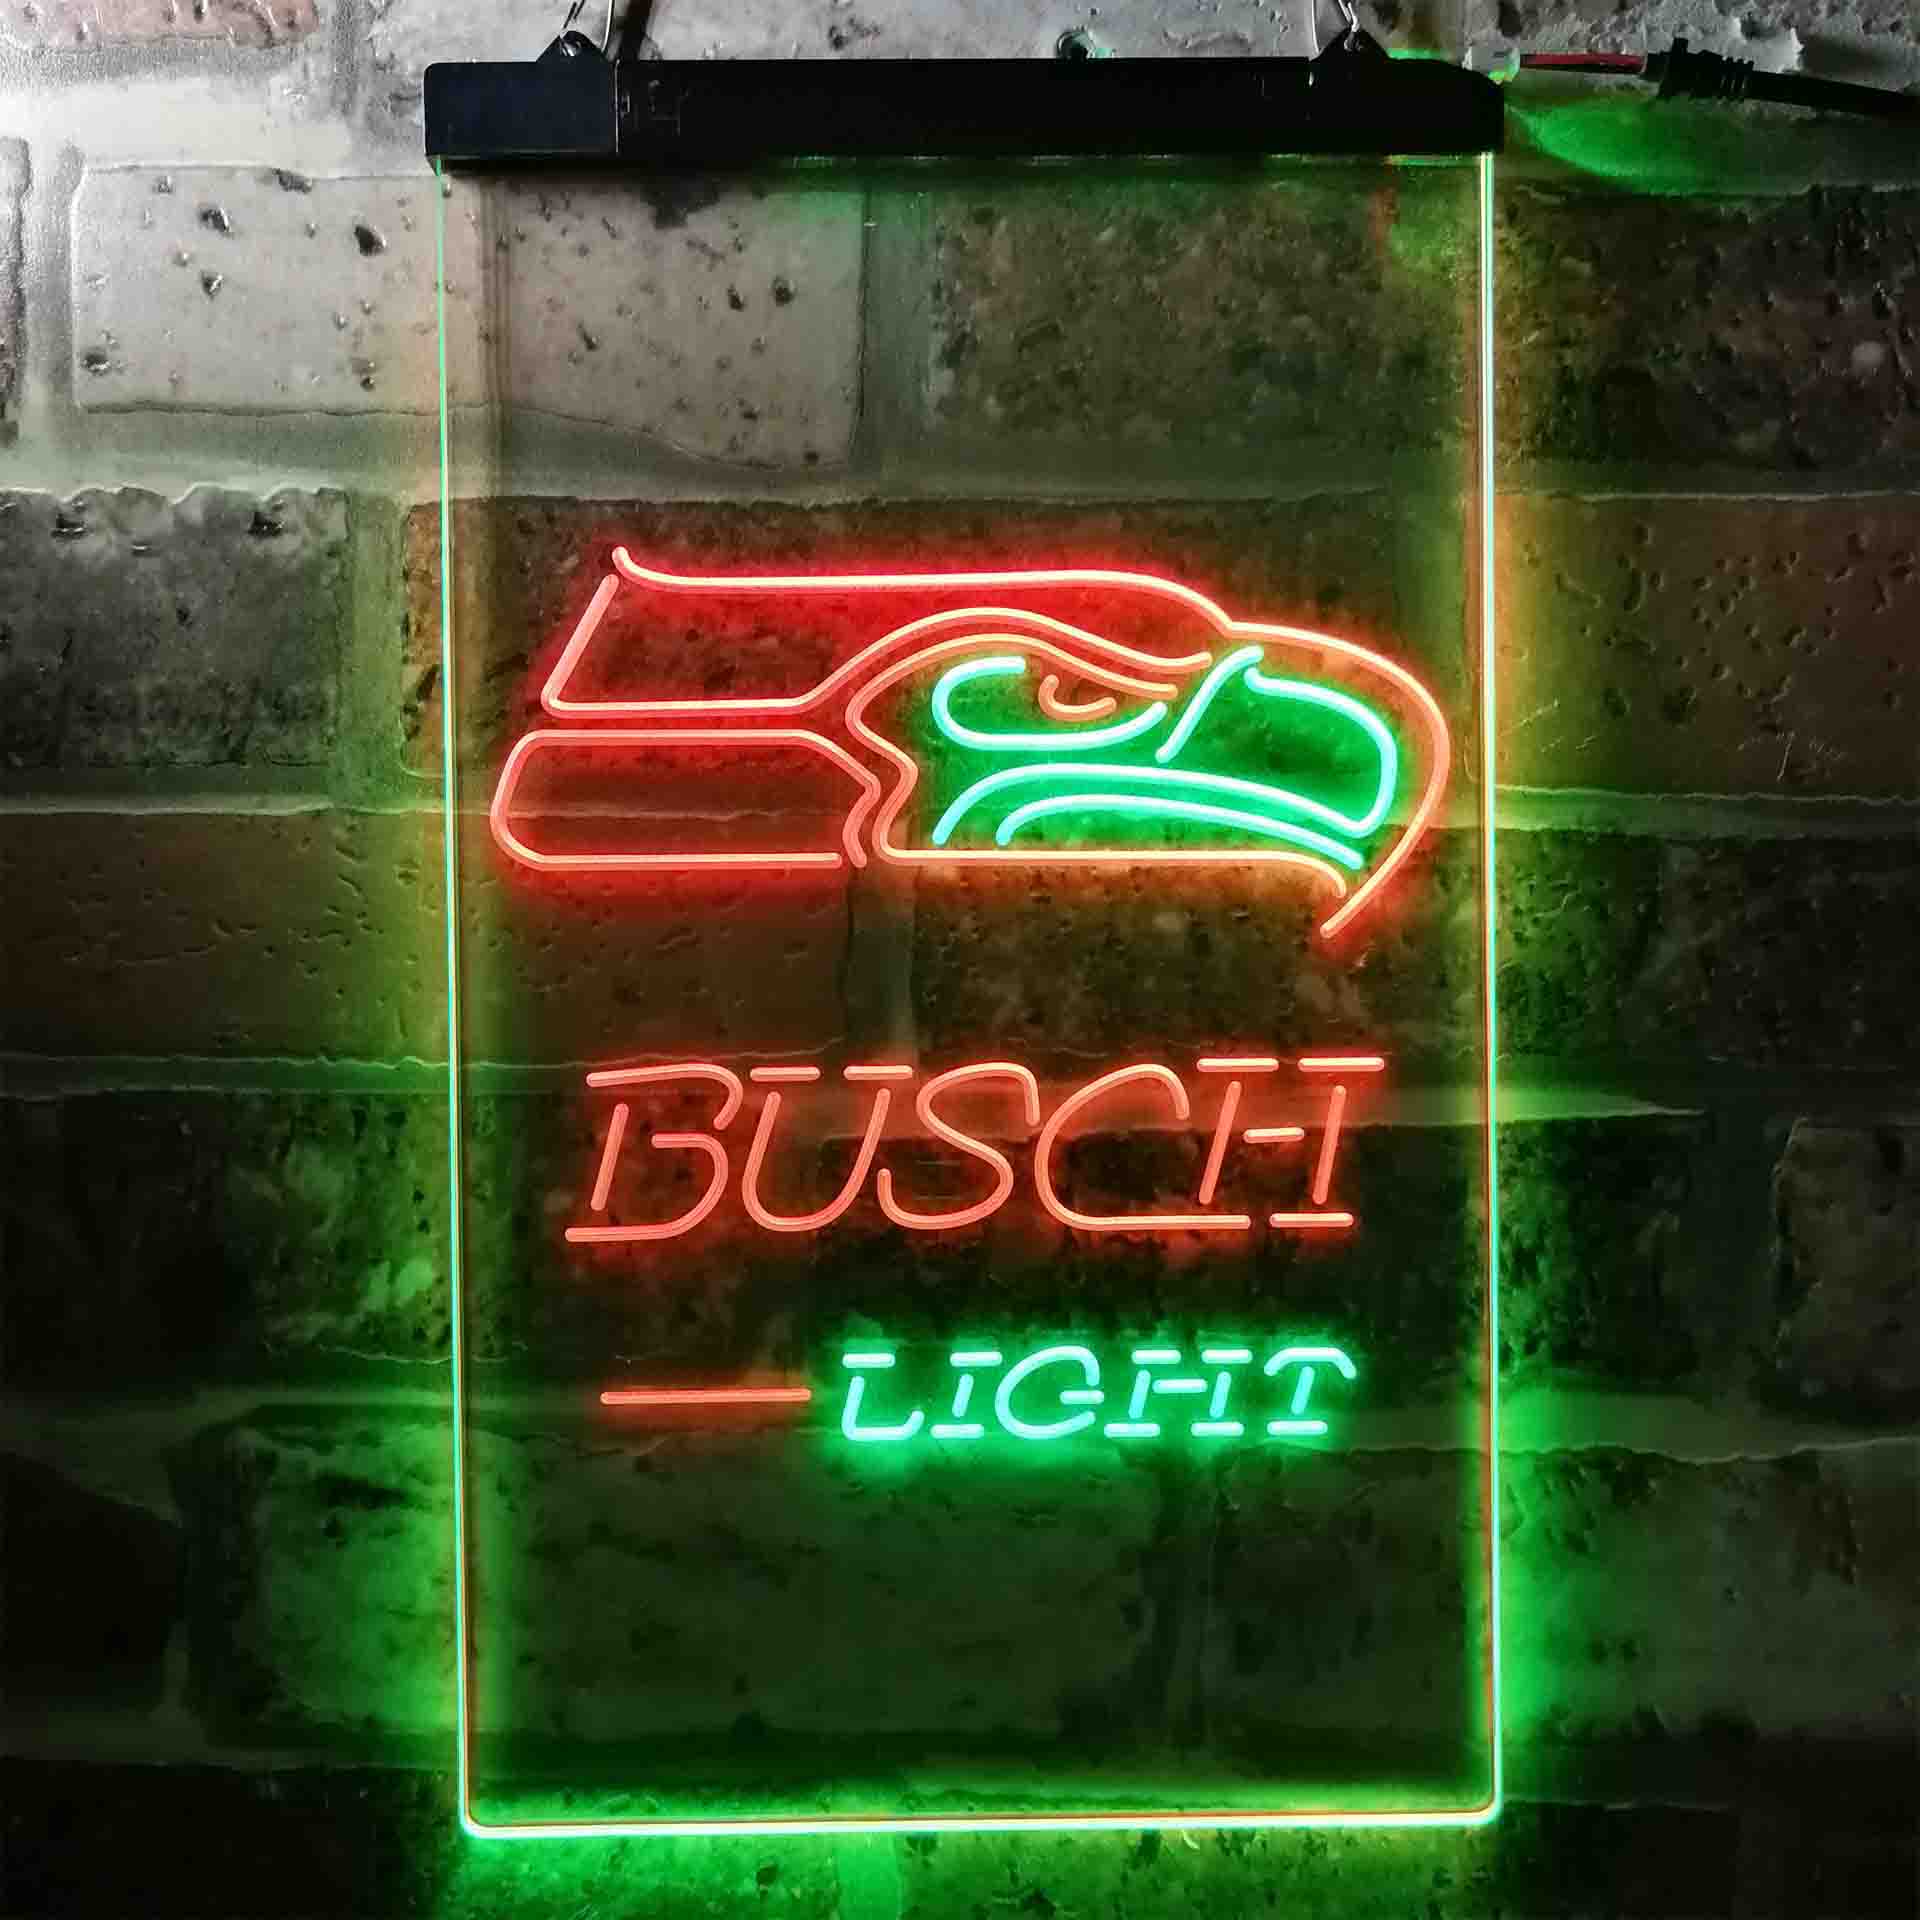 Seattle Seahawks Busch Light LED Neon Sign